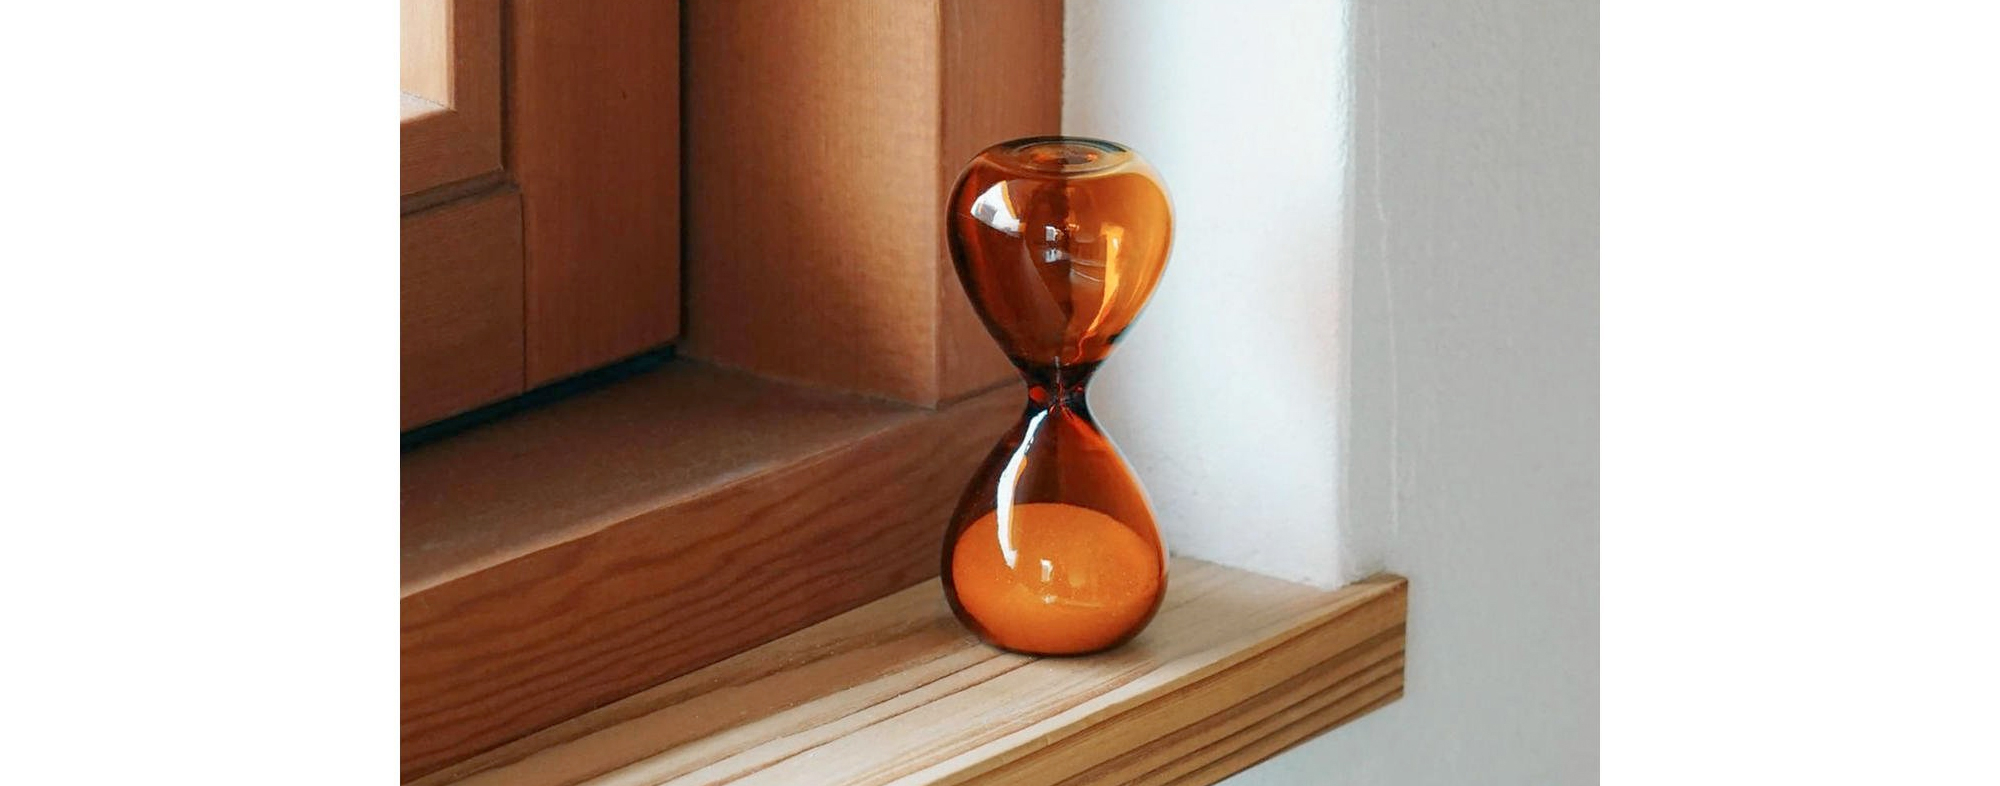 Hightide Hourglass S Ambar - Clessidra 3 Minuti - Vendita online su  Goldpen.it